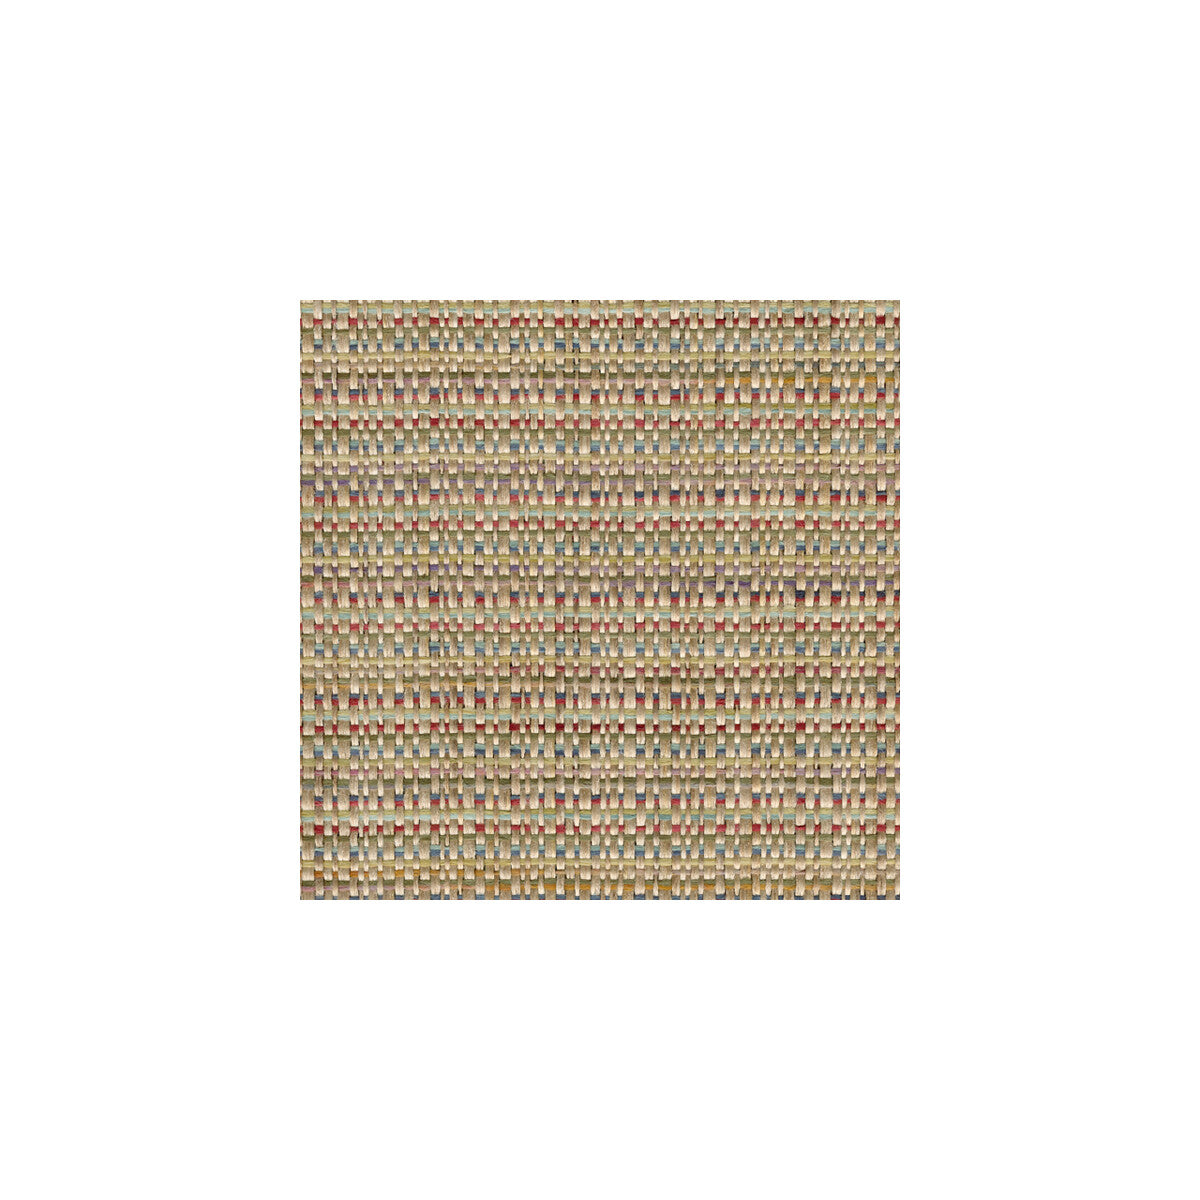 Kravet Smart fabric in 31757-519 color - pattern 31757.519.0 - by Kravet Smart